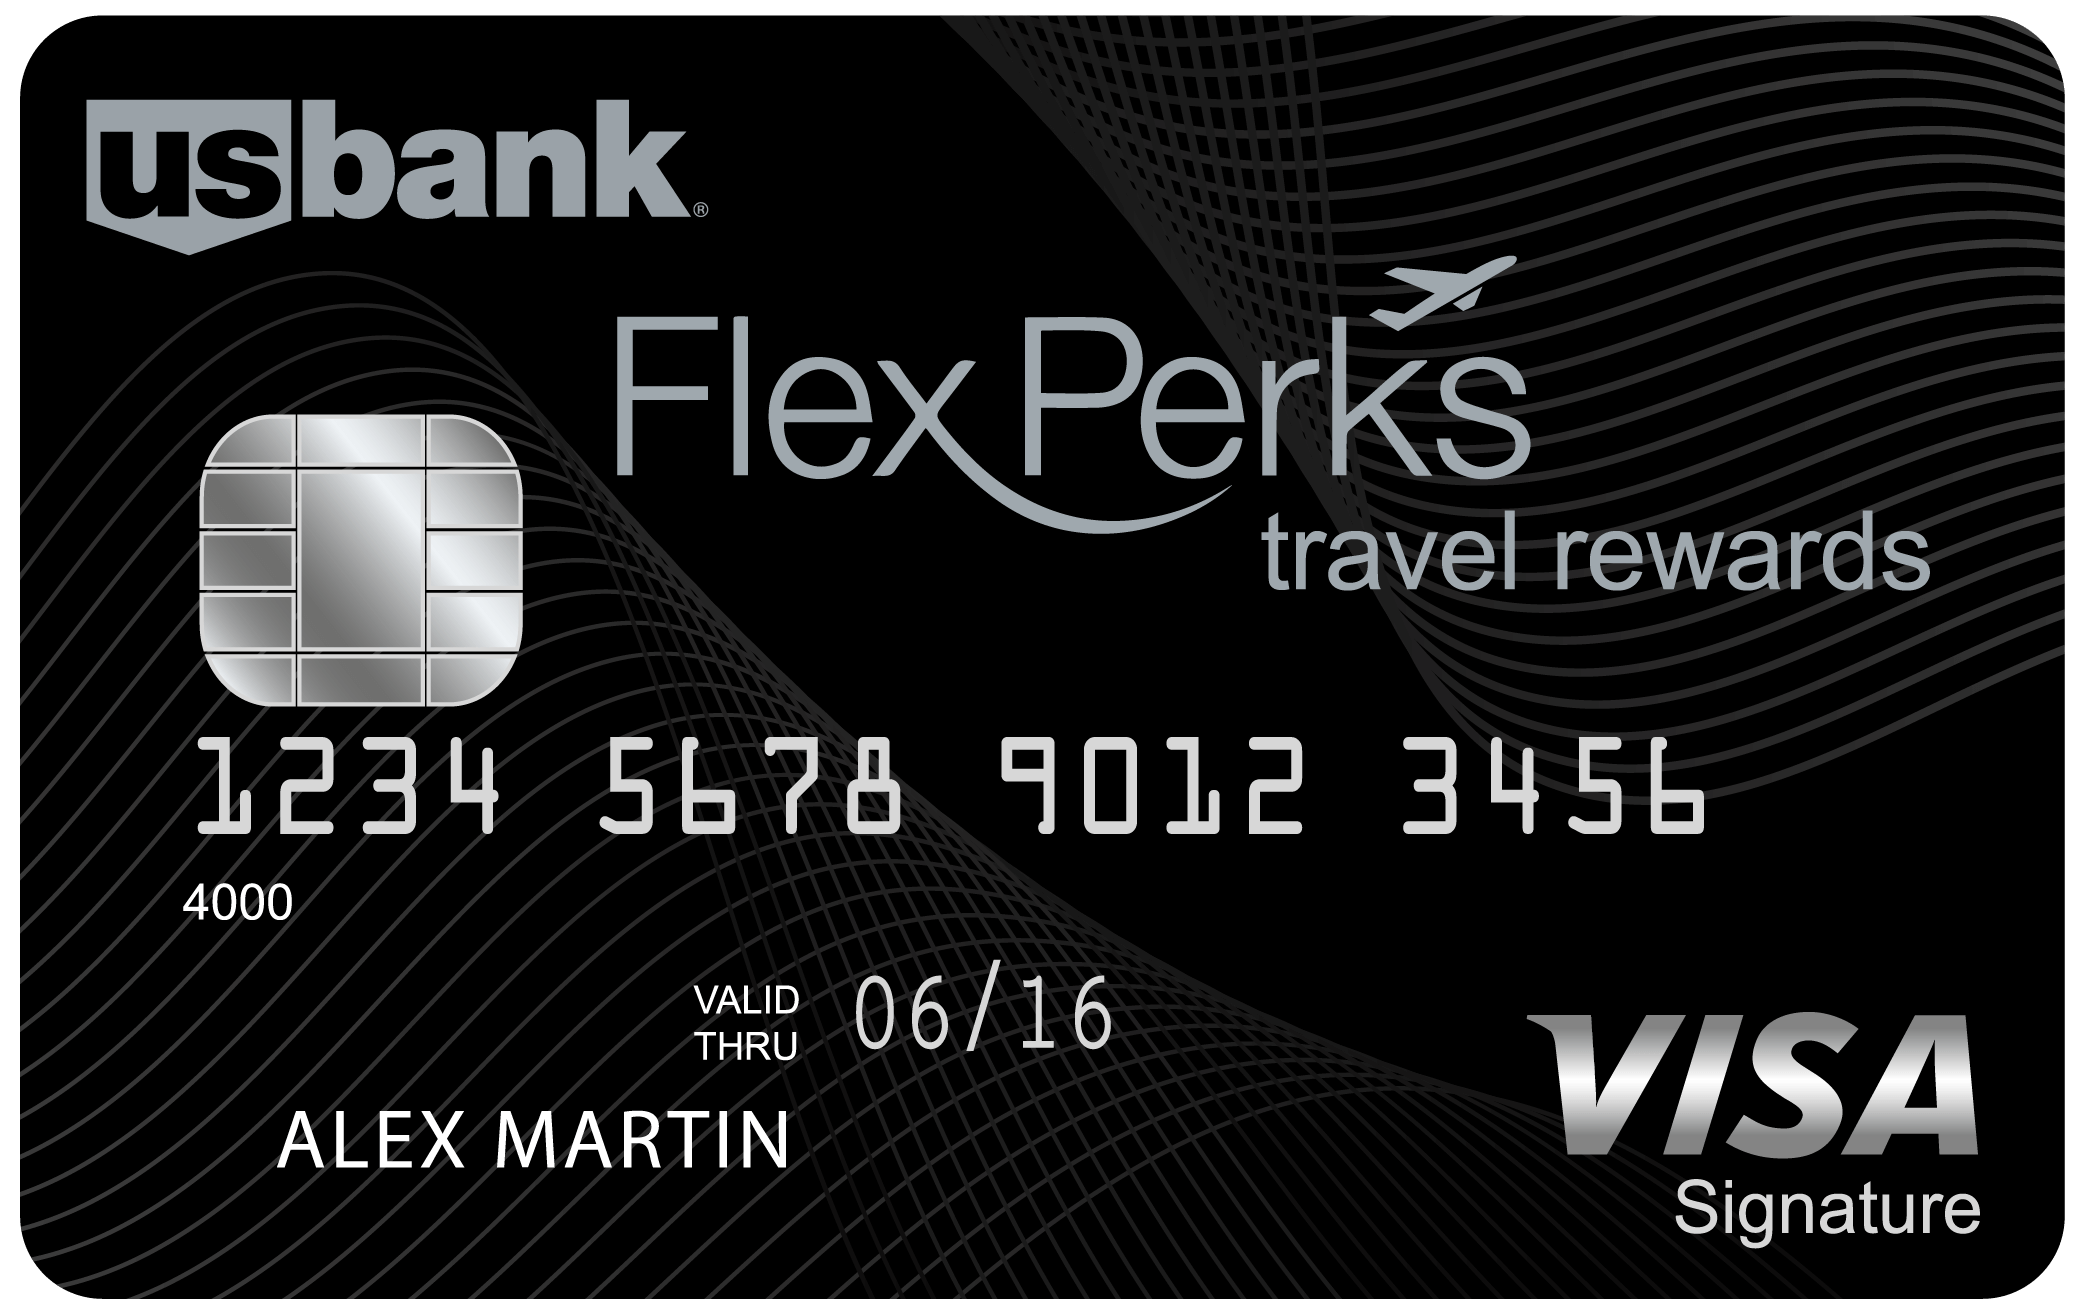 flexperks travel rewards visa signature